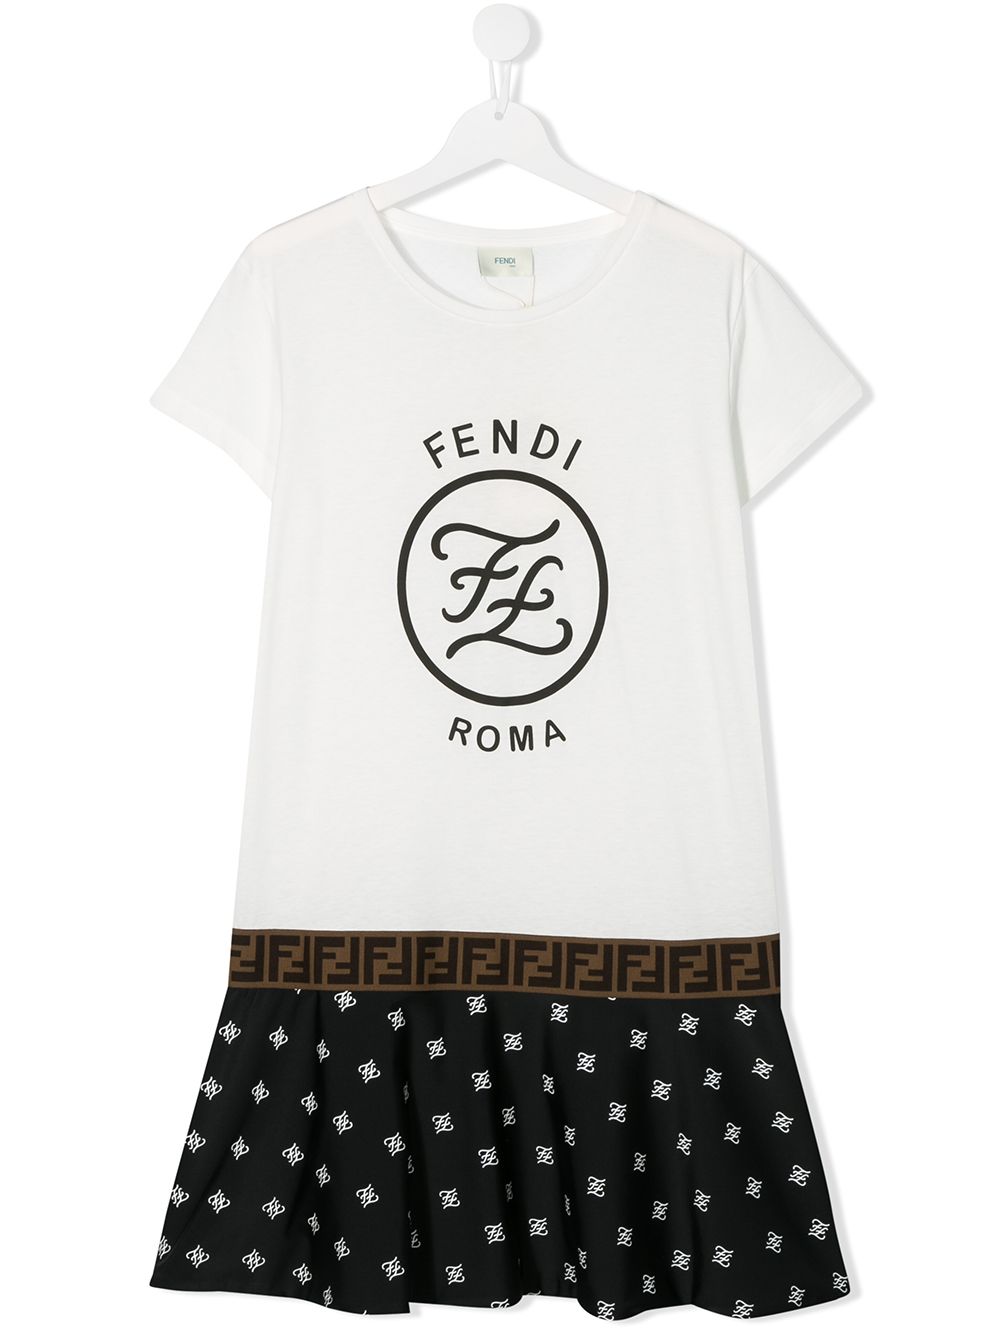 FENDI TEEN LOGO PRINTED T-SHIRT DRESS